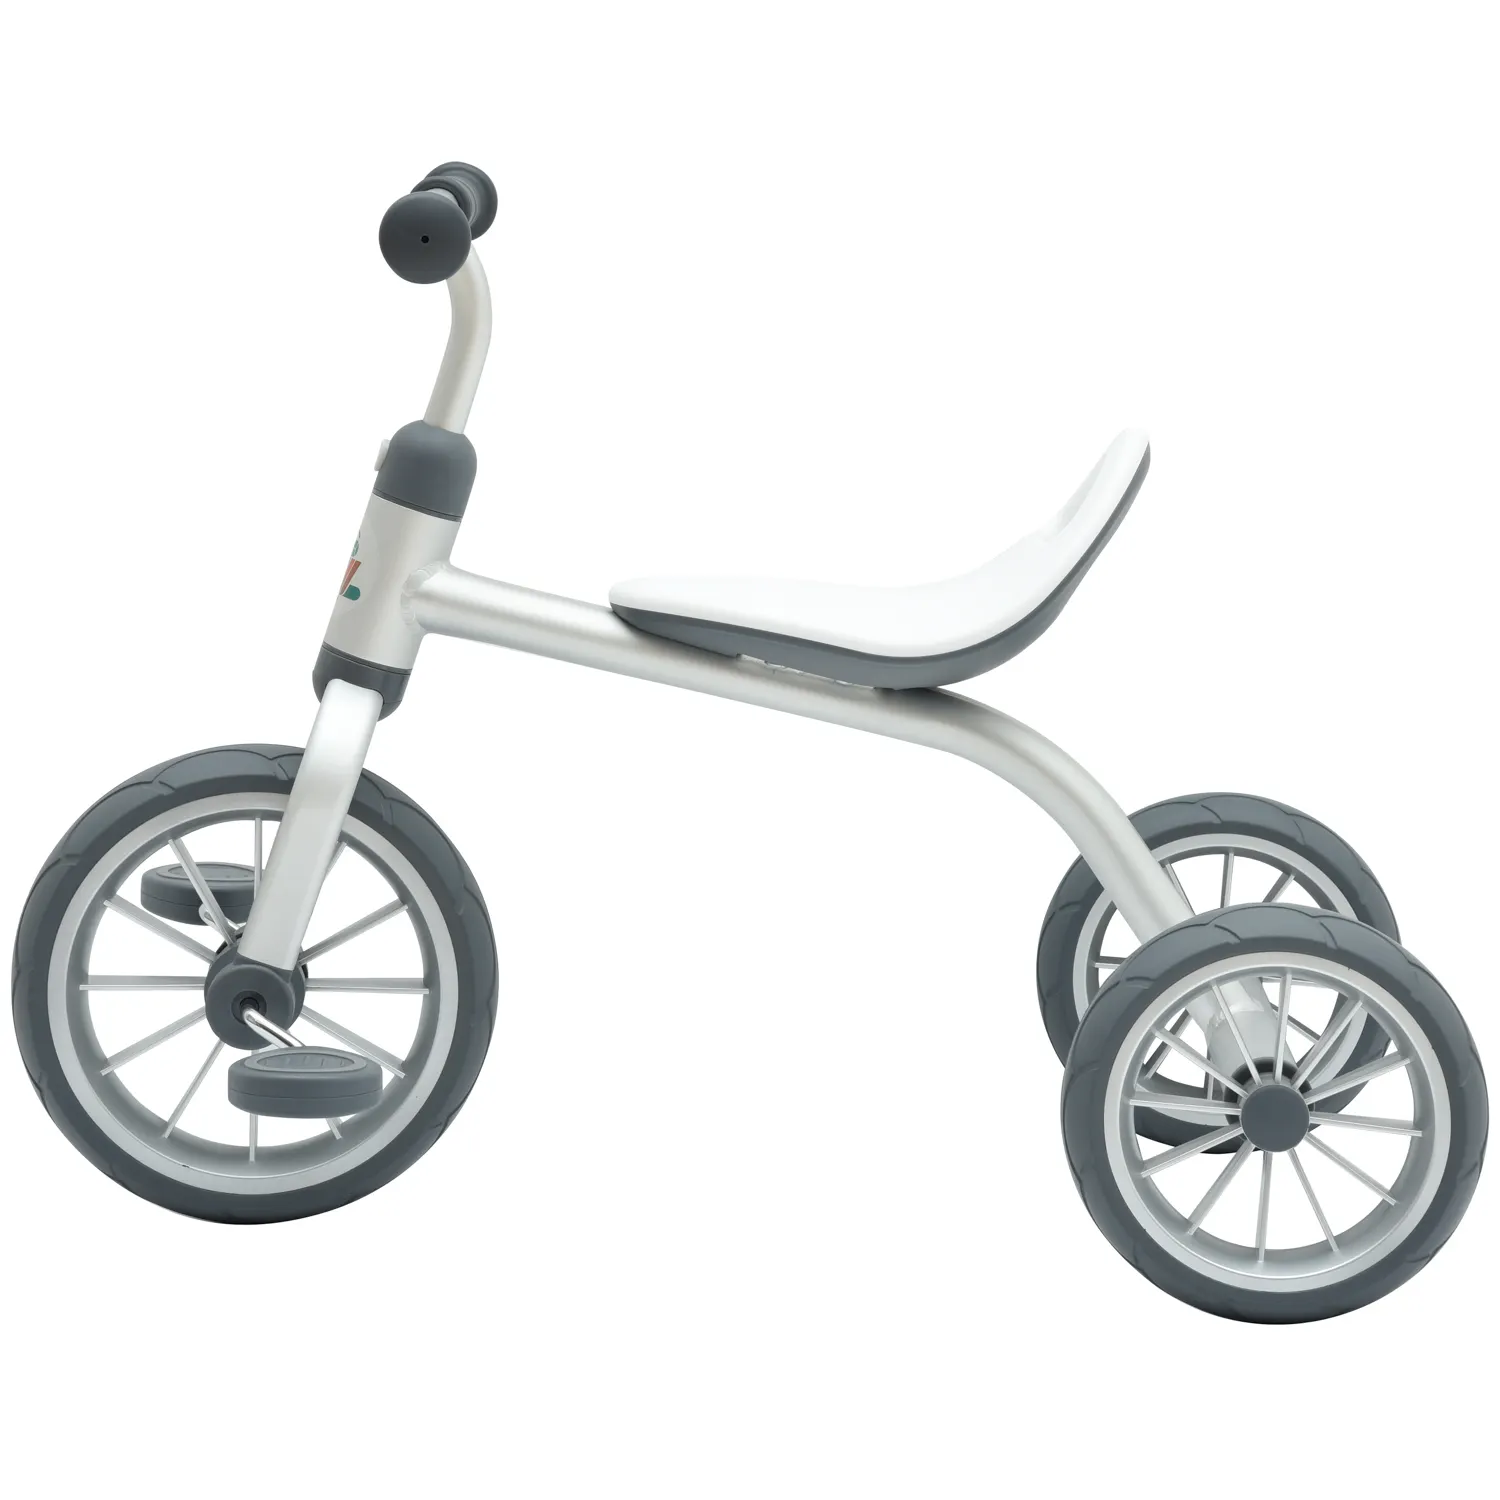 Neueste Multifunktions-Kinder fahrrad Baby Kinderwagen Pedal Dreirad Trolley Dreirad Kind 3 Rad für Kinder Baby